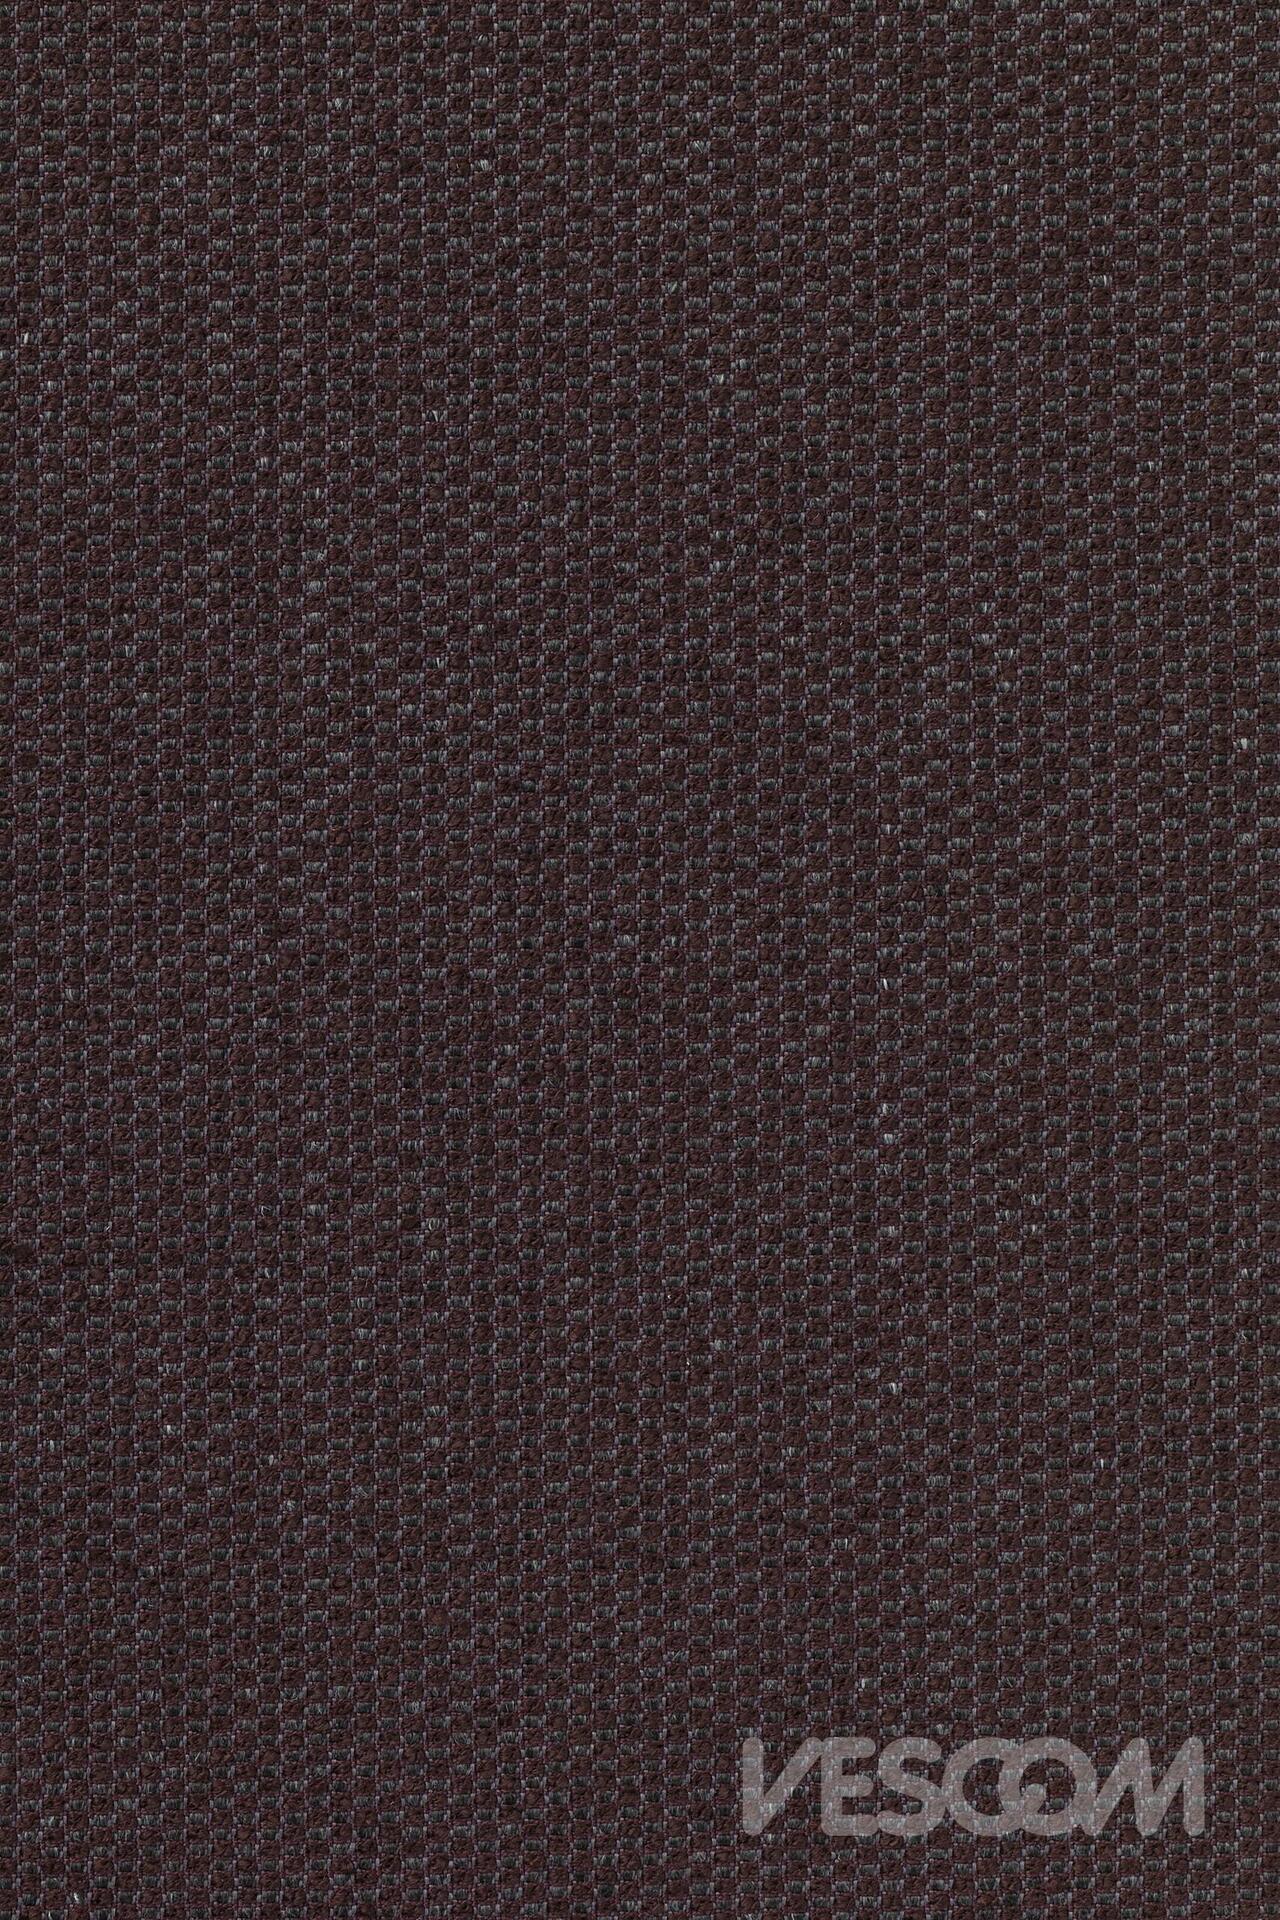 vescom-burton-upholstery-fabric-7056-10